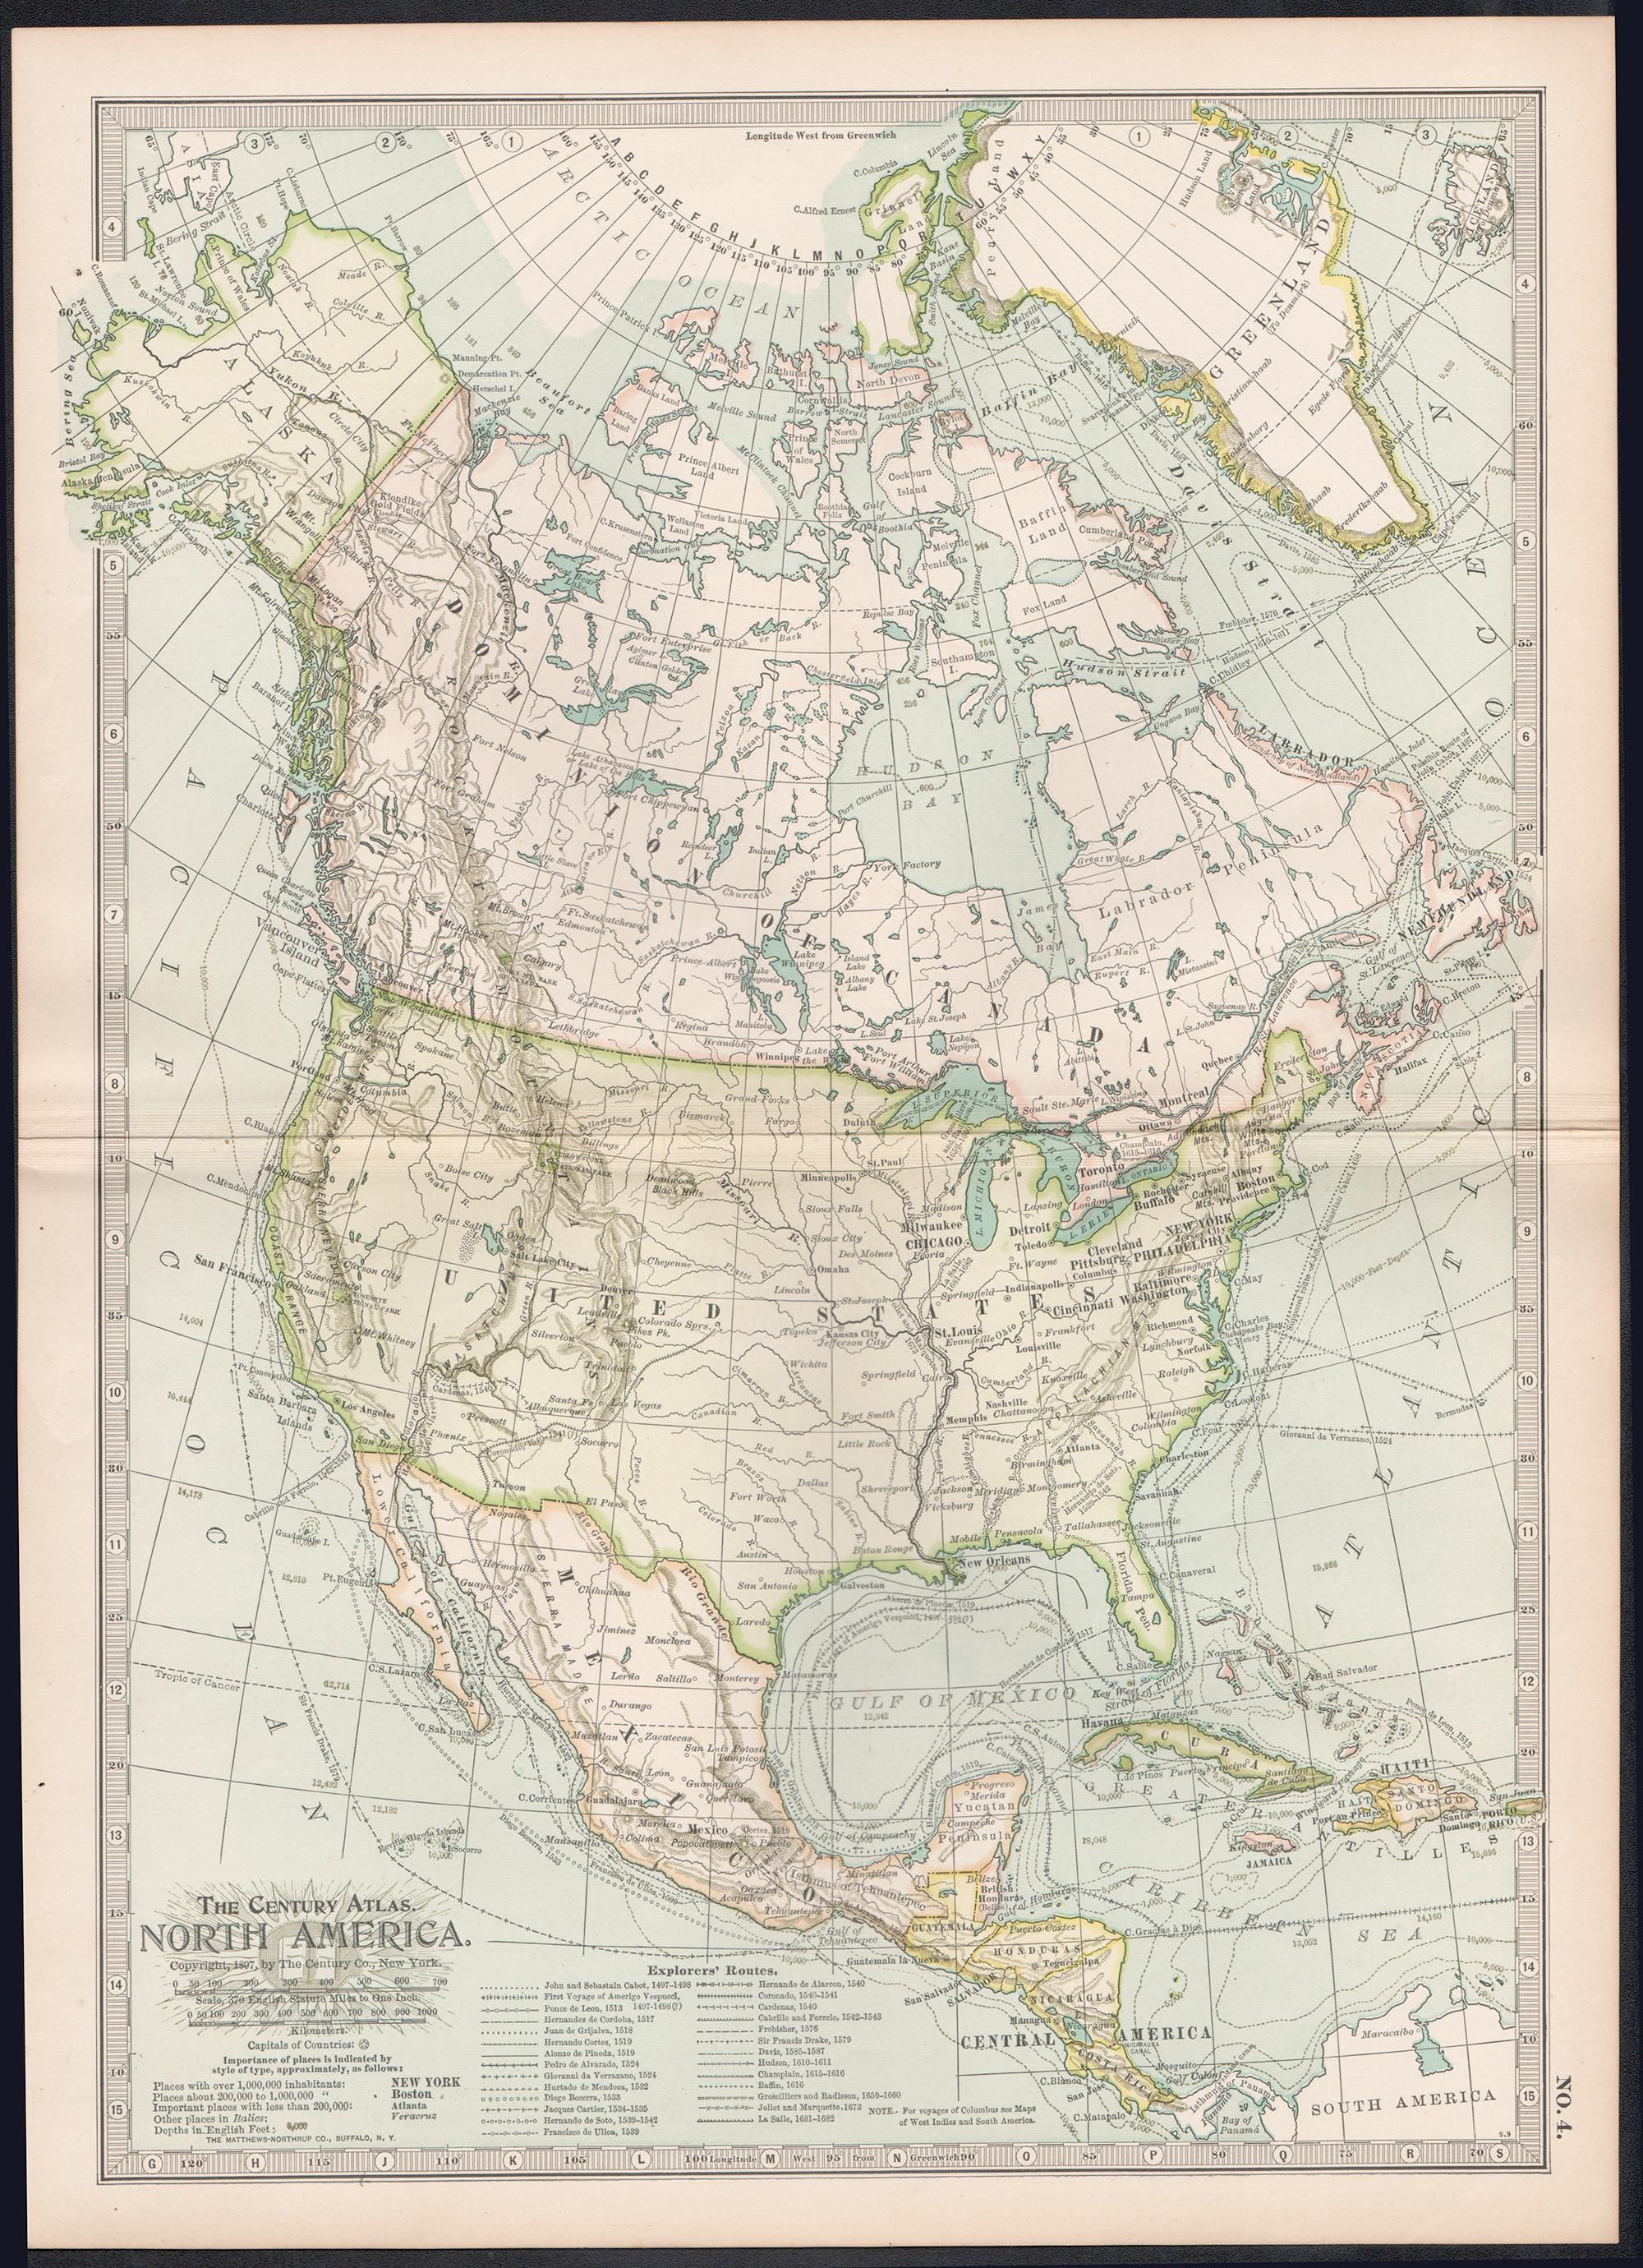 North America. Century Atlas antique vintage map - Print by Unknown